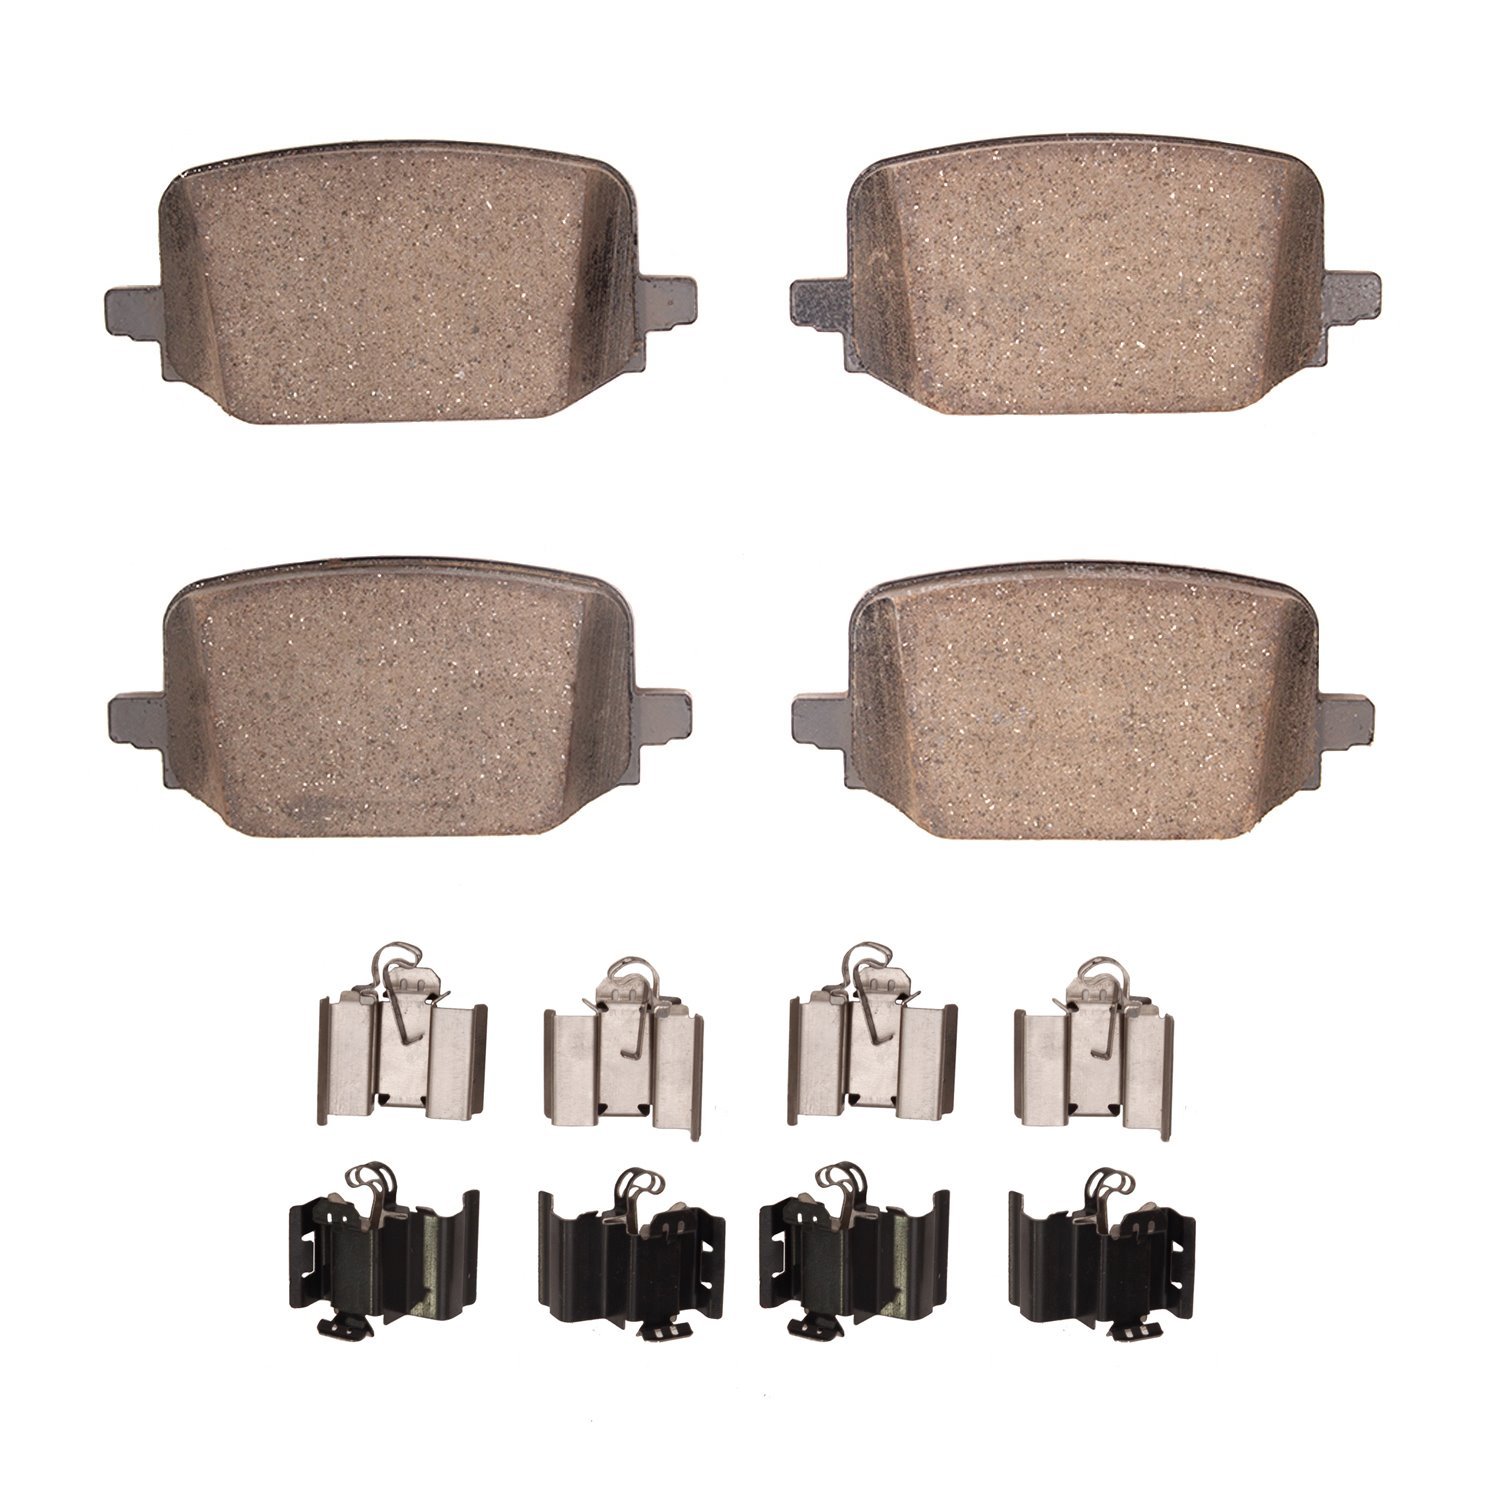 1551-2232-01 5000 Advanced Ceramic Brake Pads & Hardware Kit, Fits Select Ford/Lincoln/Mercury/Mazda, Position: Rear